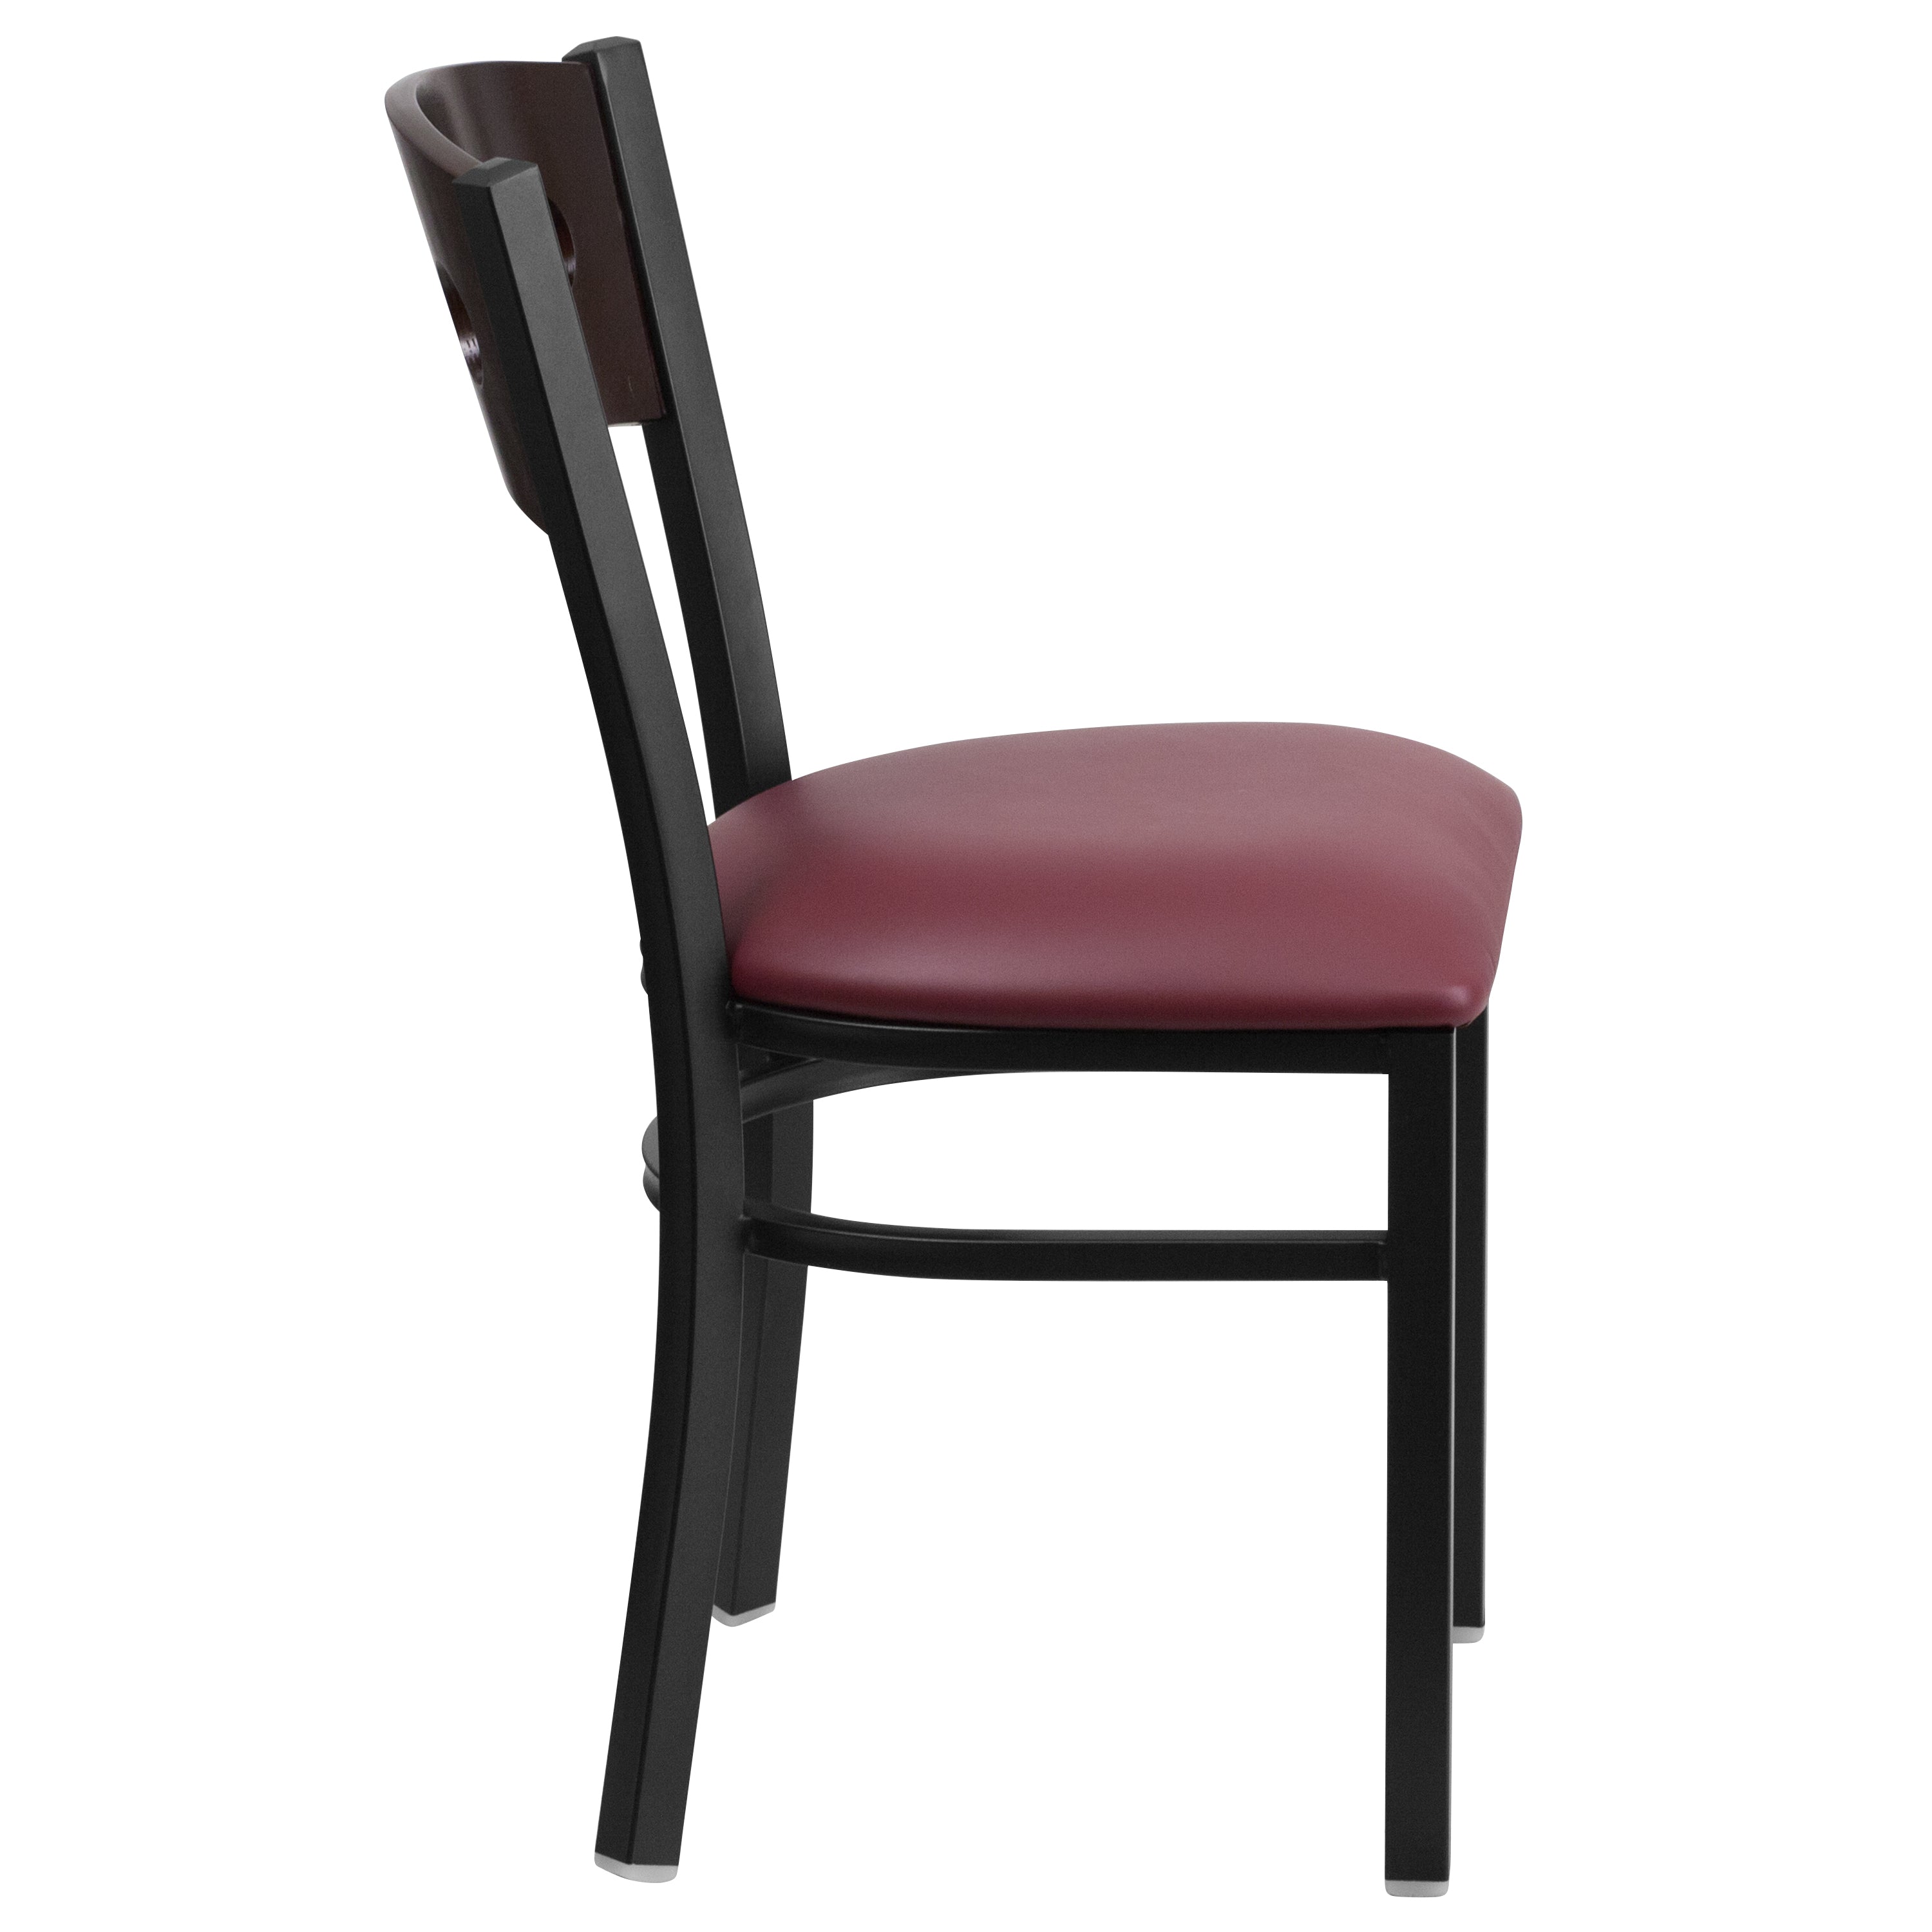 Decorative 3 Circle Back Metal Restaurant Chair-Metal Restaurant Chair-Flash Furniture-Wall2Wall Furnishings